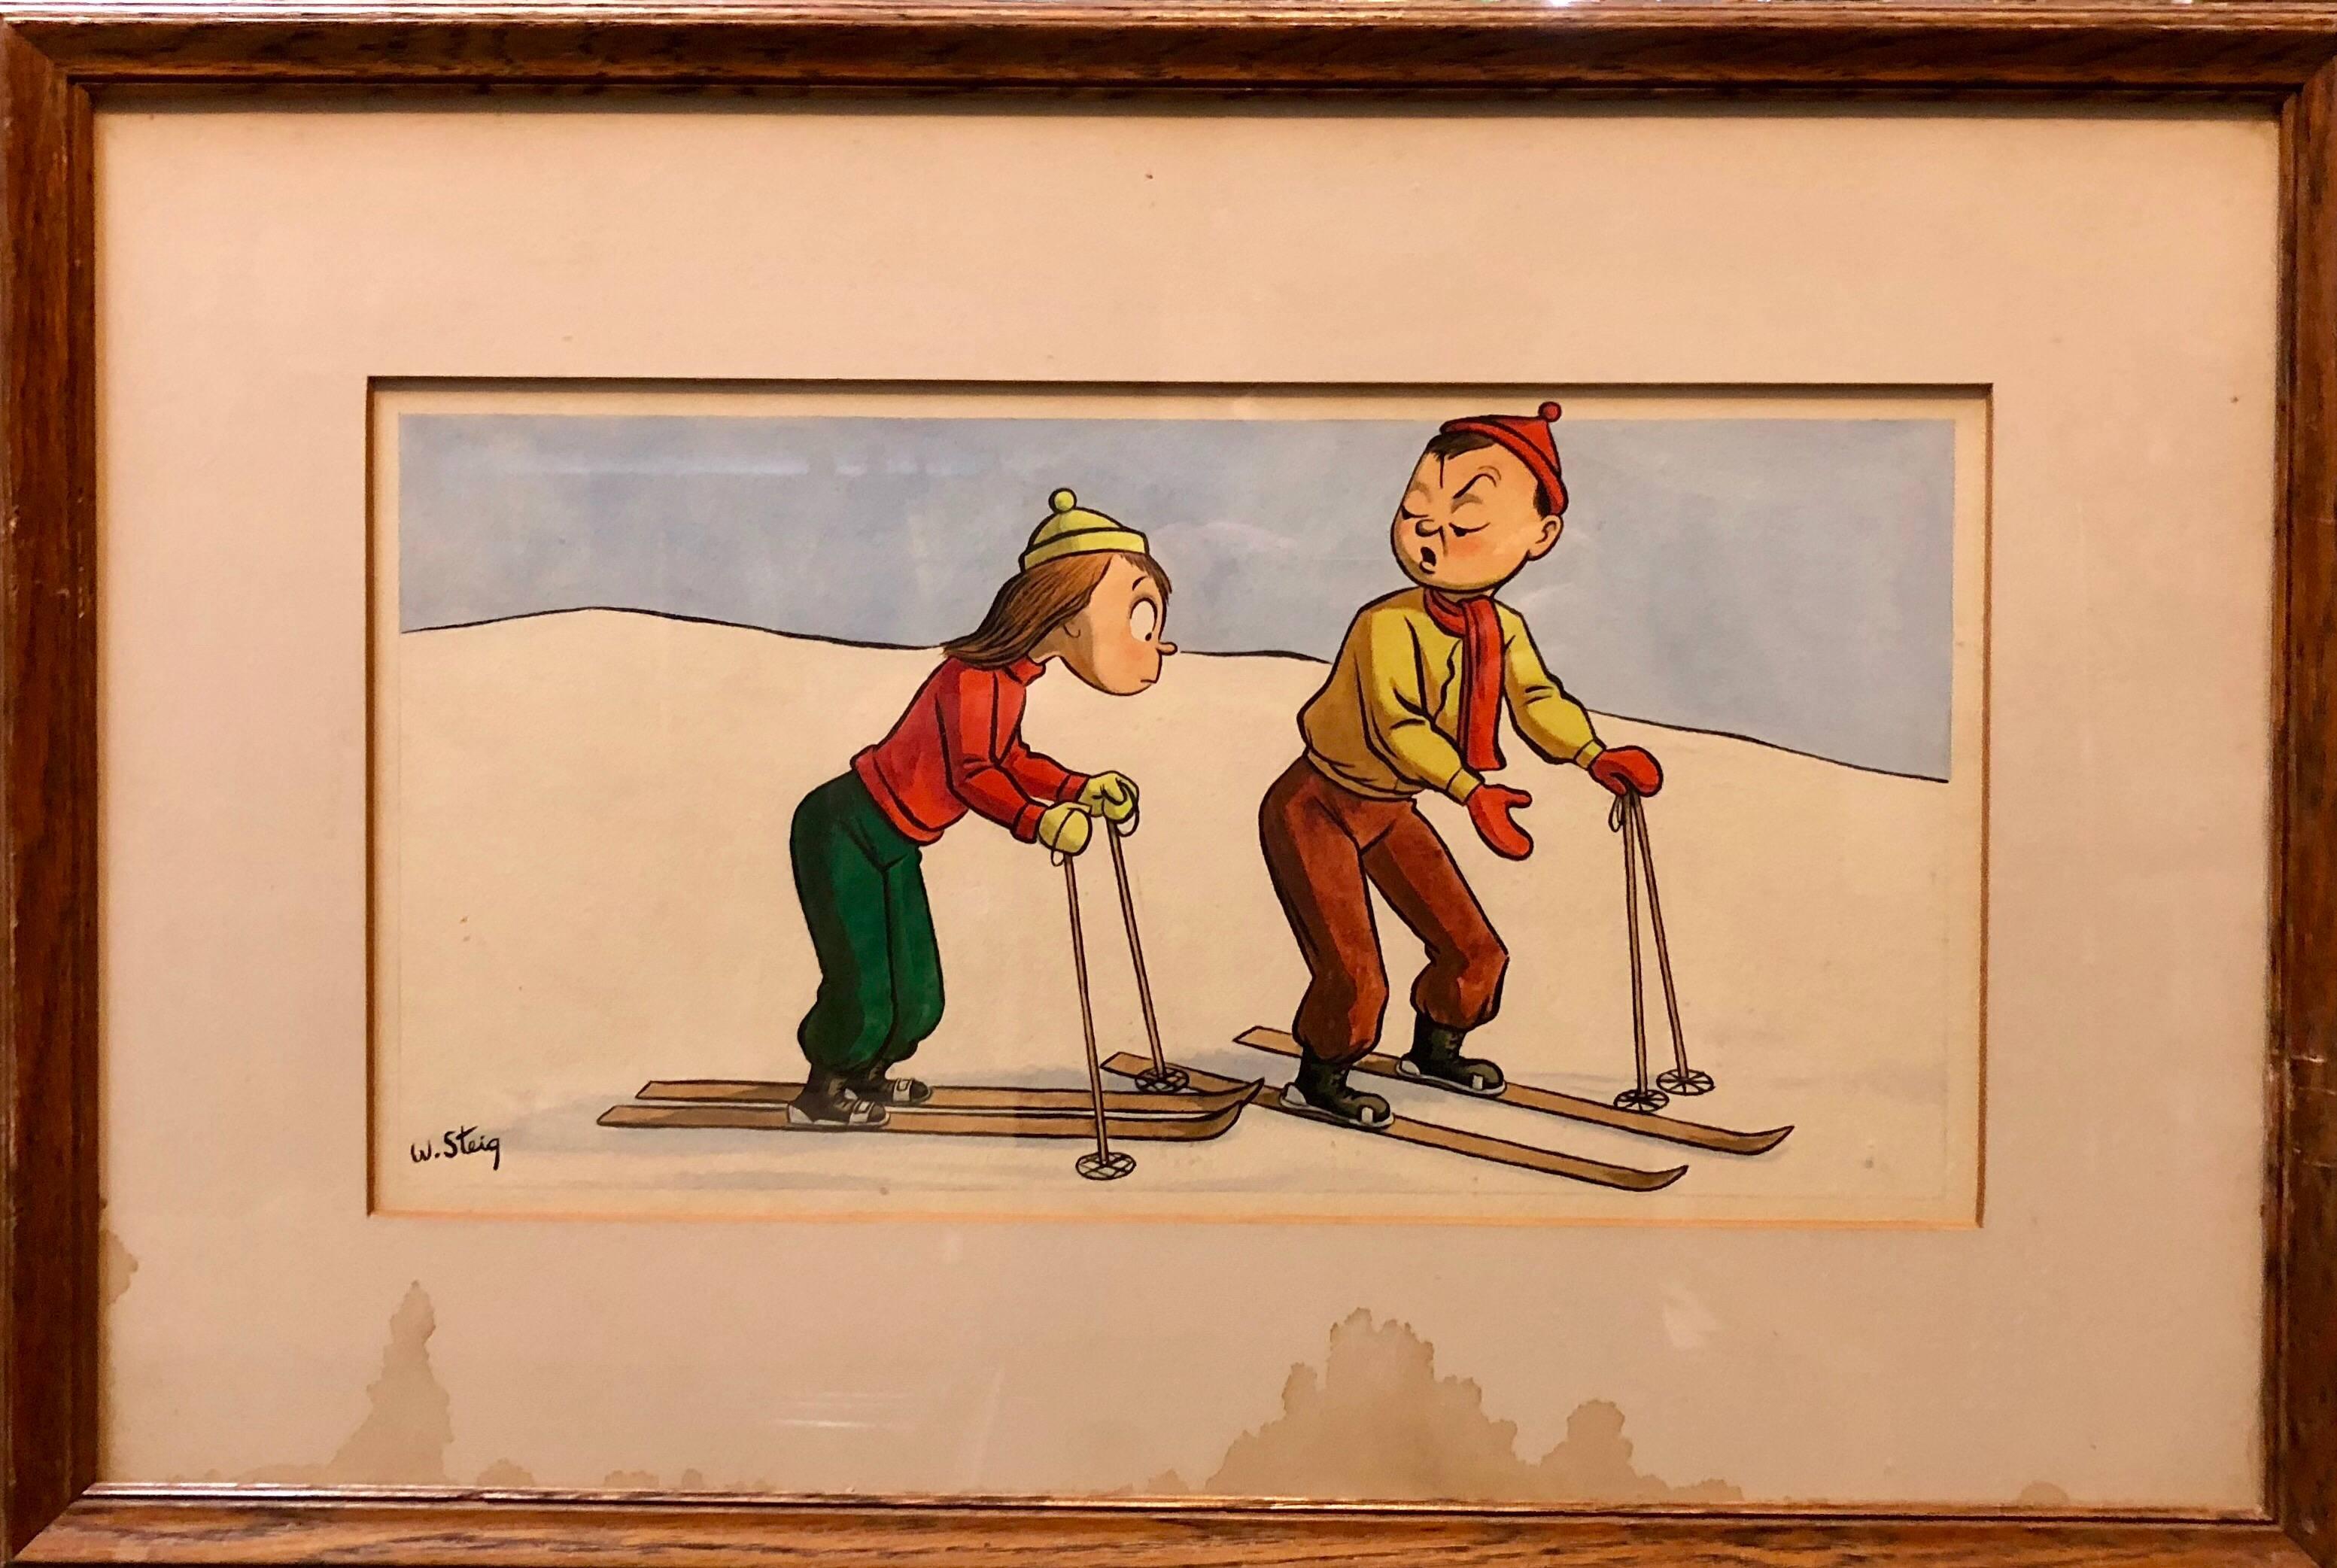 Cartoon de ski fantaisiste, 1938, Mt Tremblant Ski Lodge, William Steig - Naturalisme Art par William Steig (b.1907)